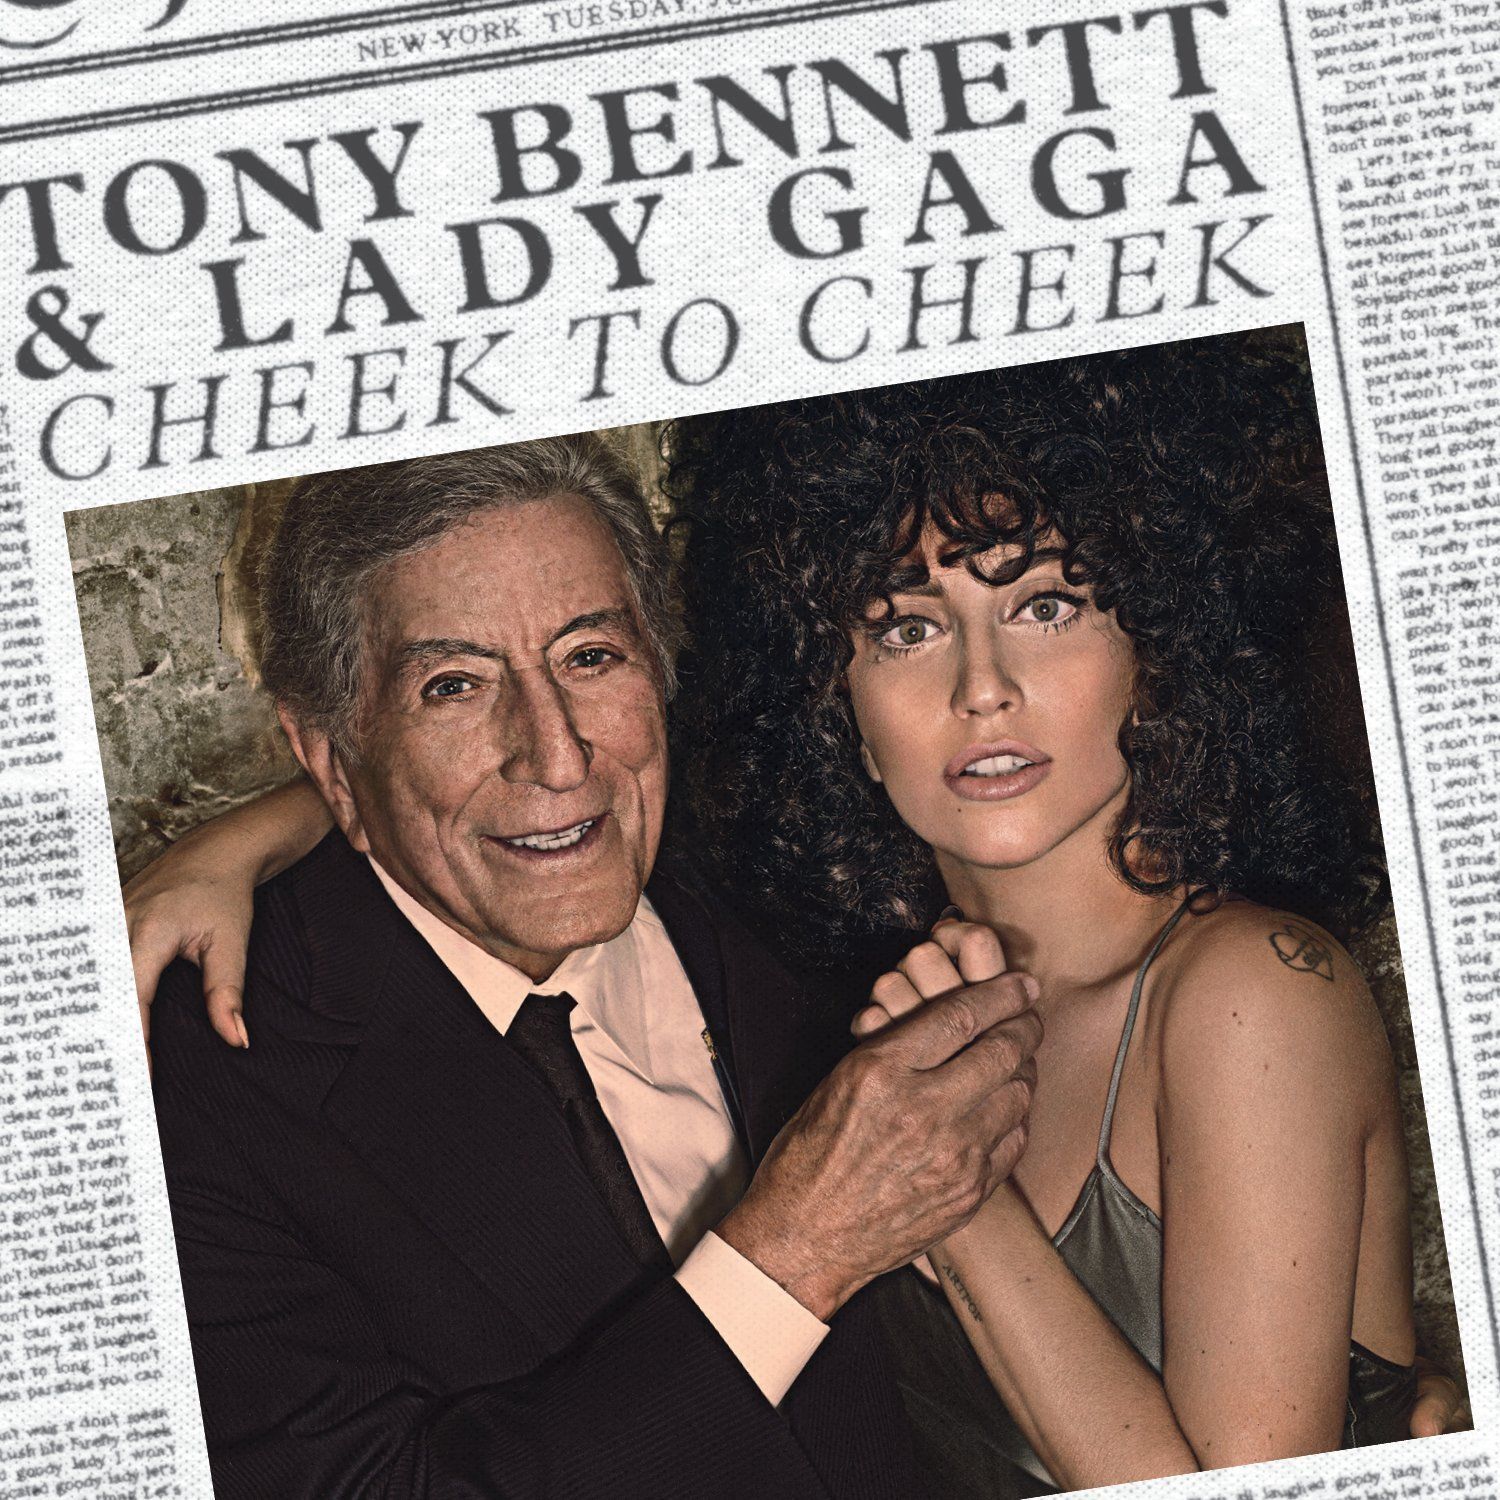 TONY BENNETT - Tony Bennett & Lady Gaga : Cheek to Cheek cover 